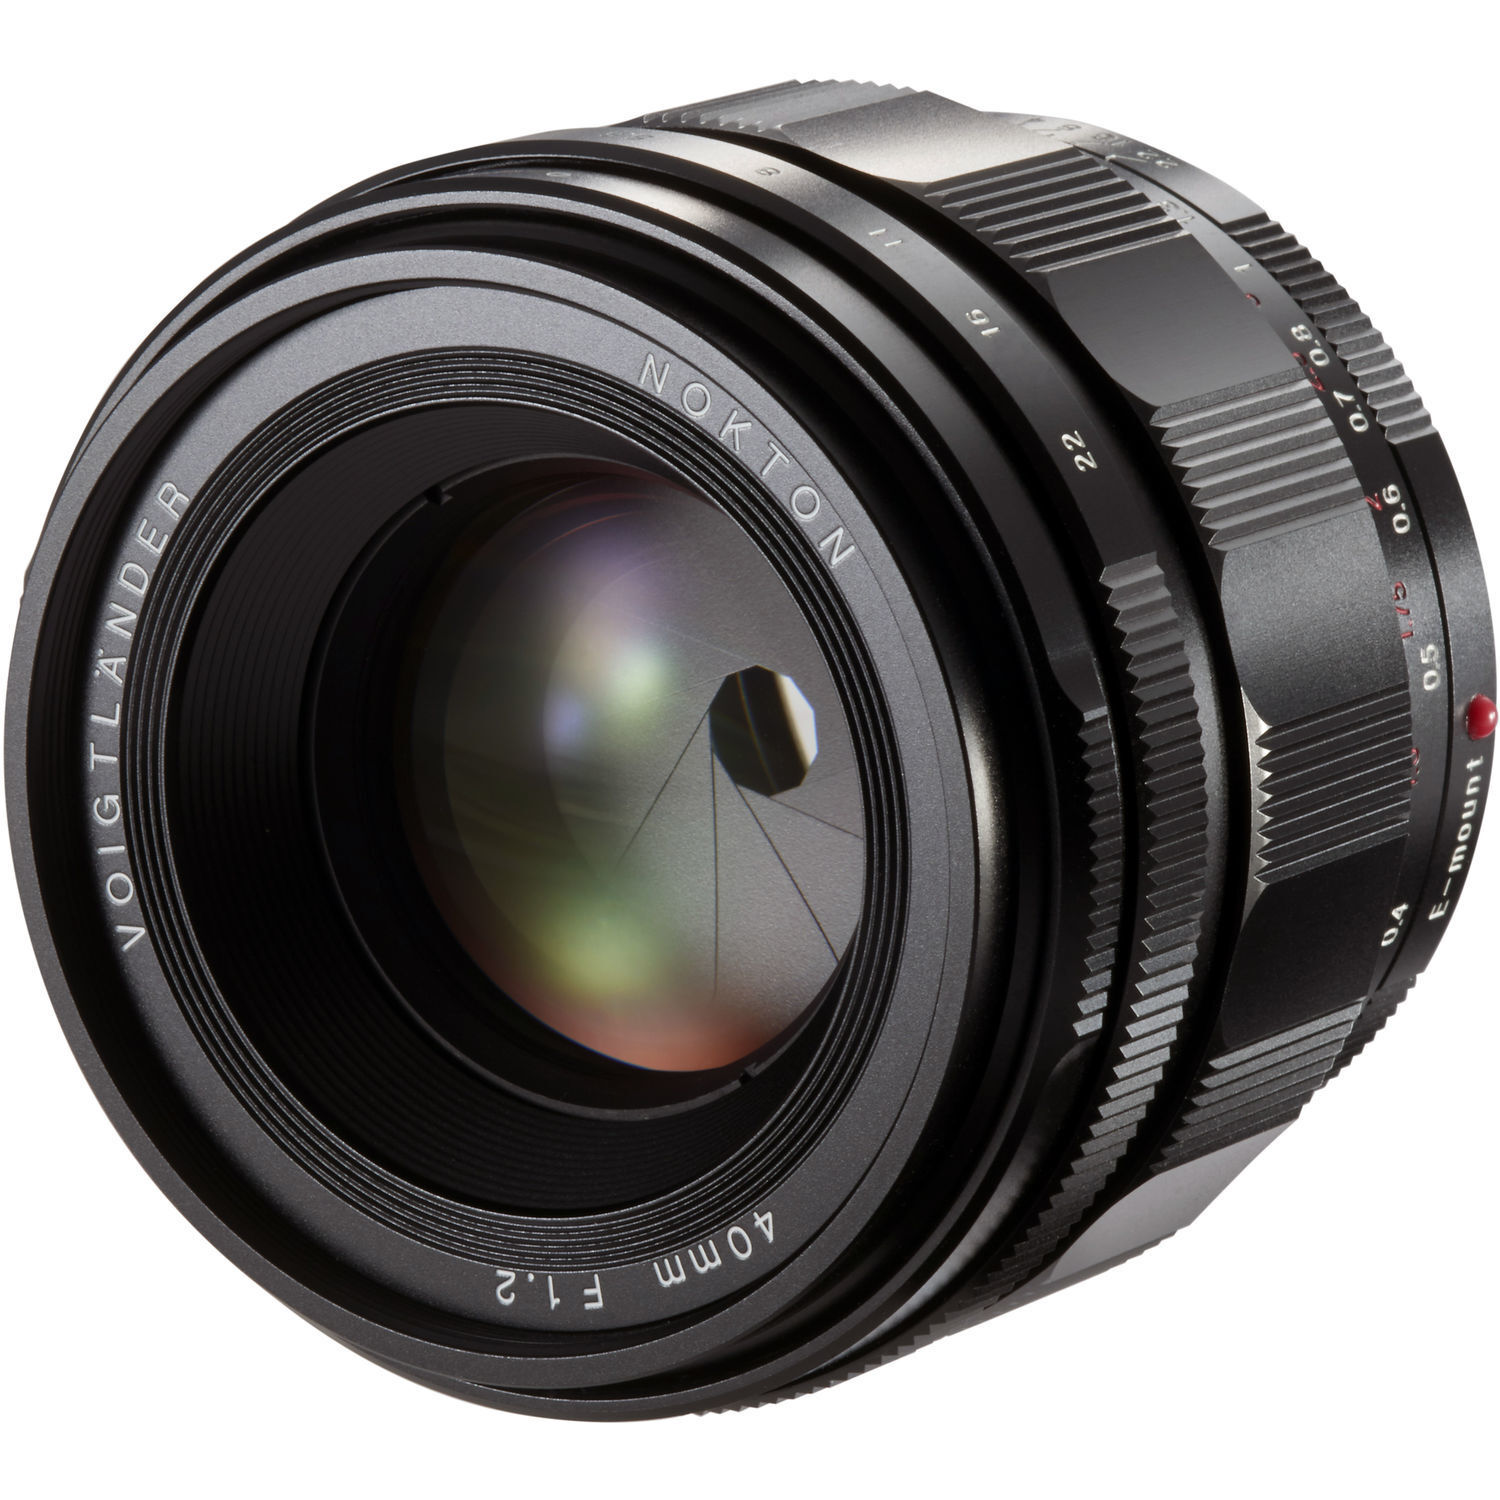 Объектив Voigtlander Nokton 40mm f/1.2 Aspherical Lens for Sony E